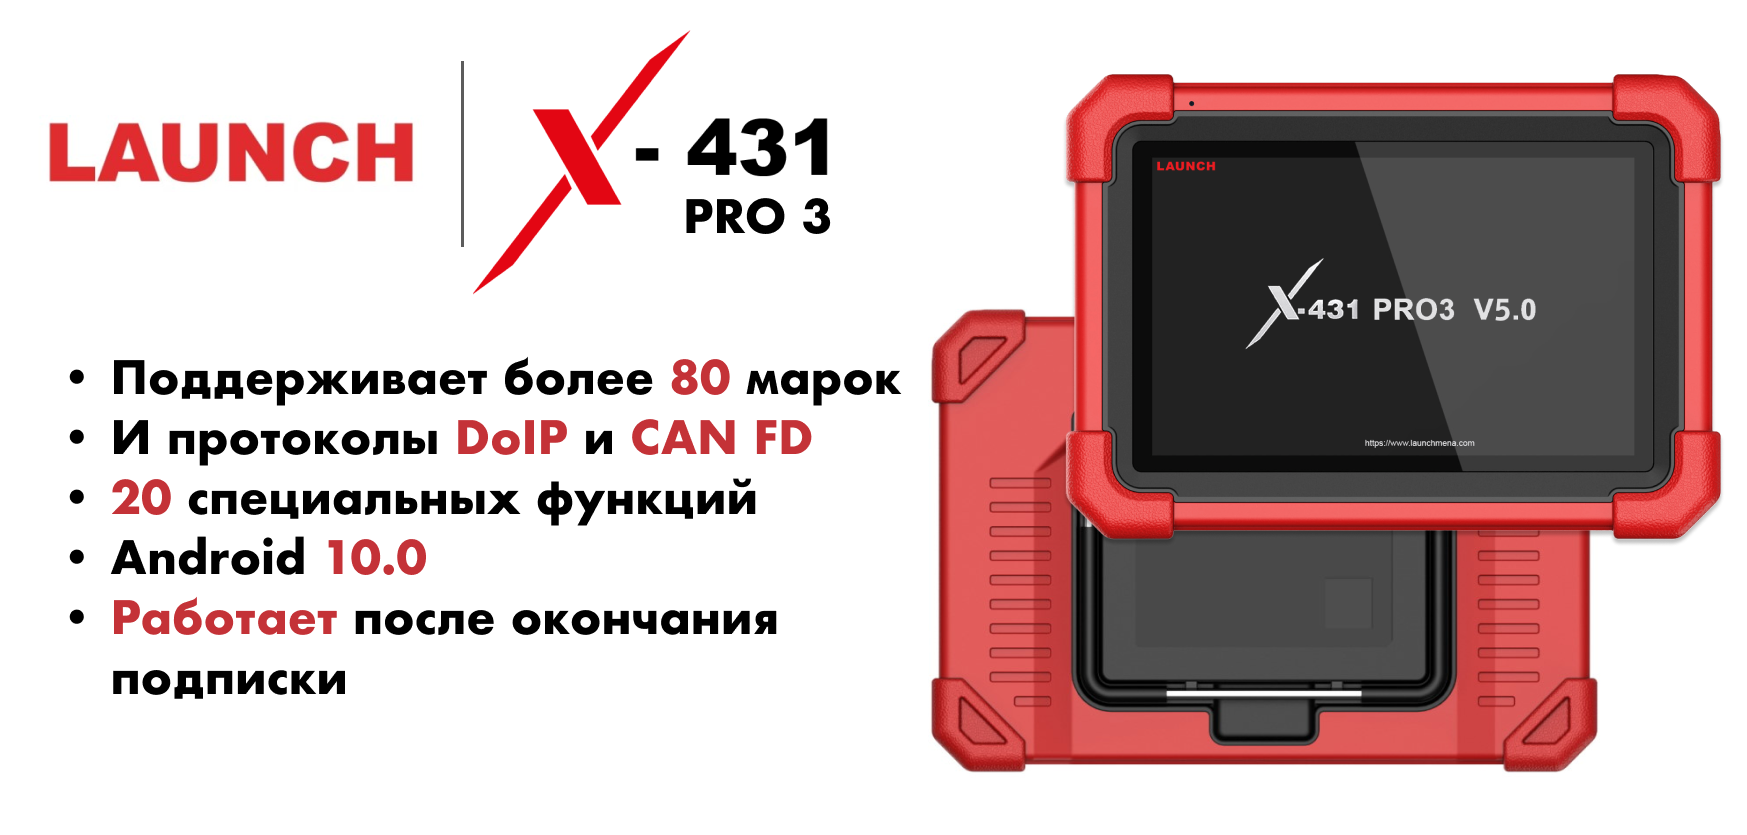 Launch X431 PRO3 V5.0